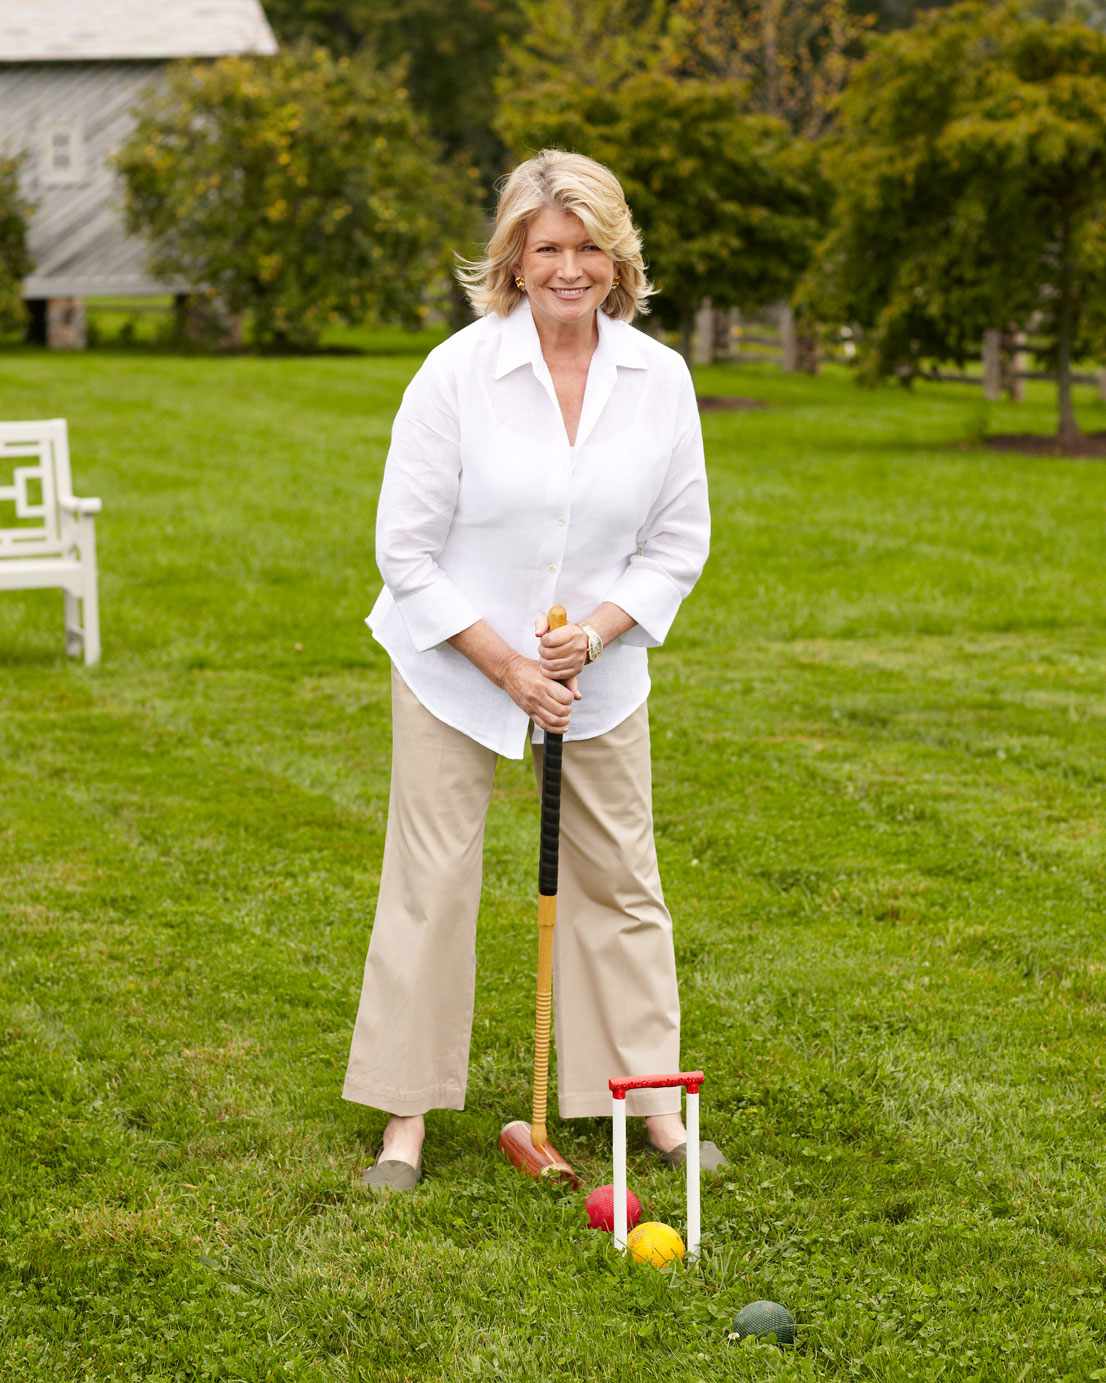 martha stewart playing croquet in backyard